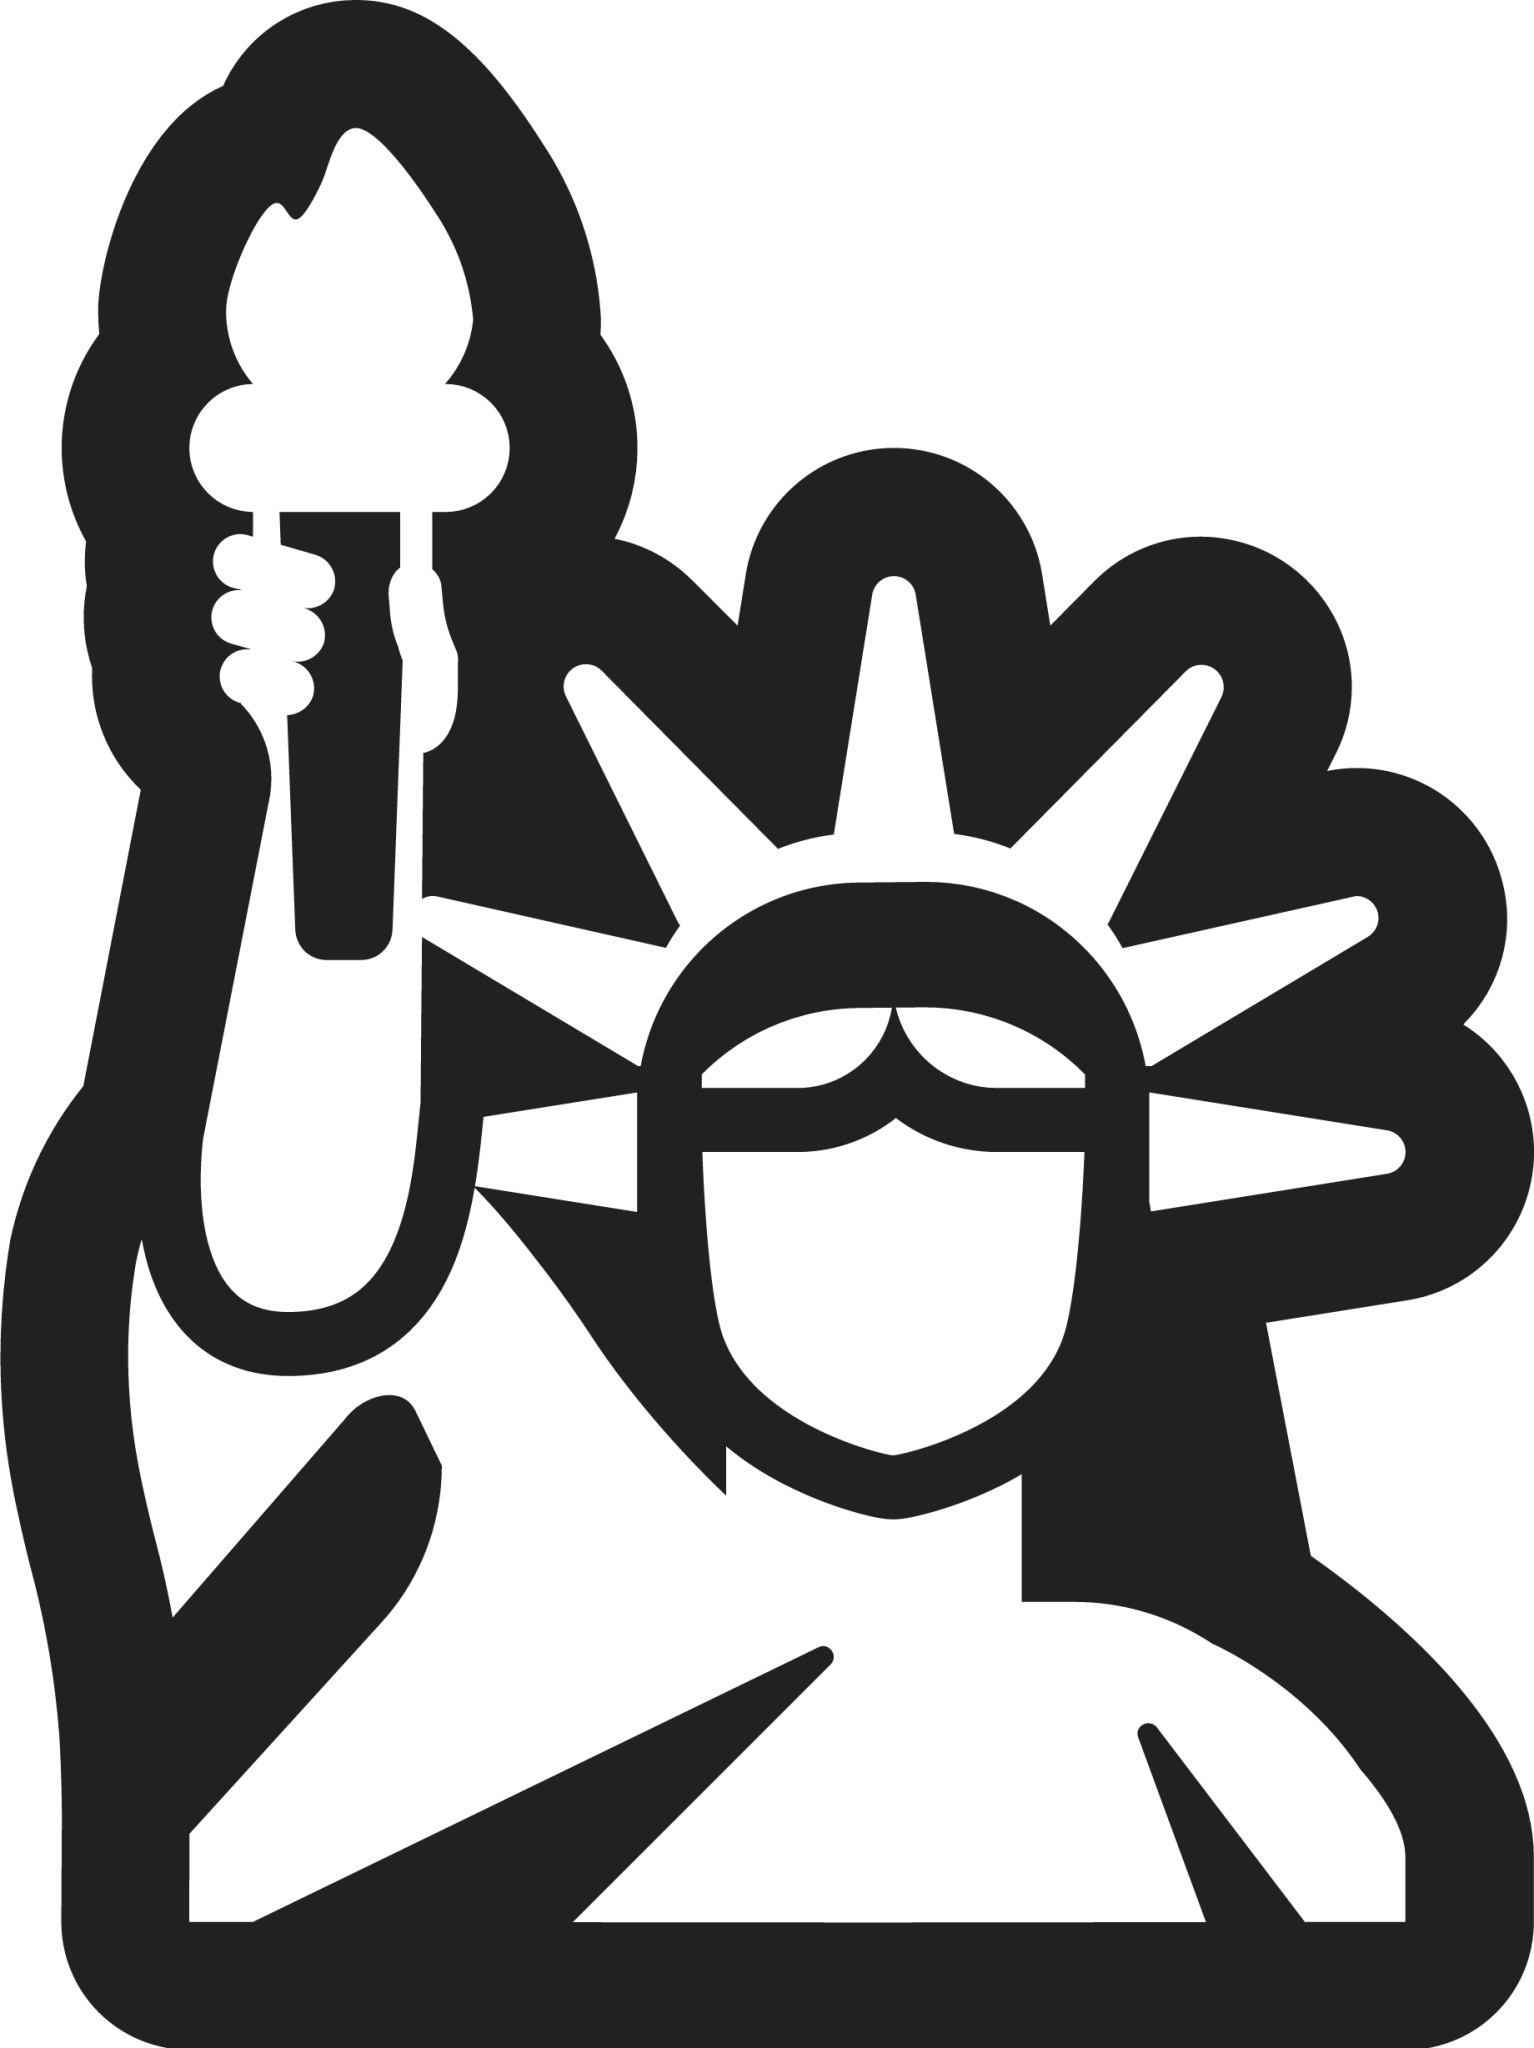 statue of liberty emoji